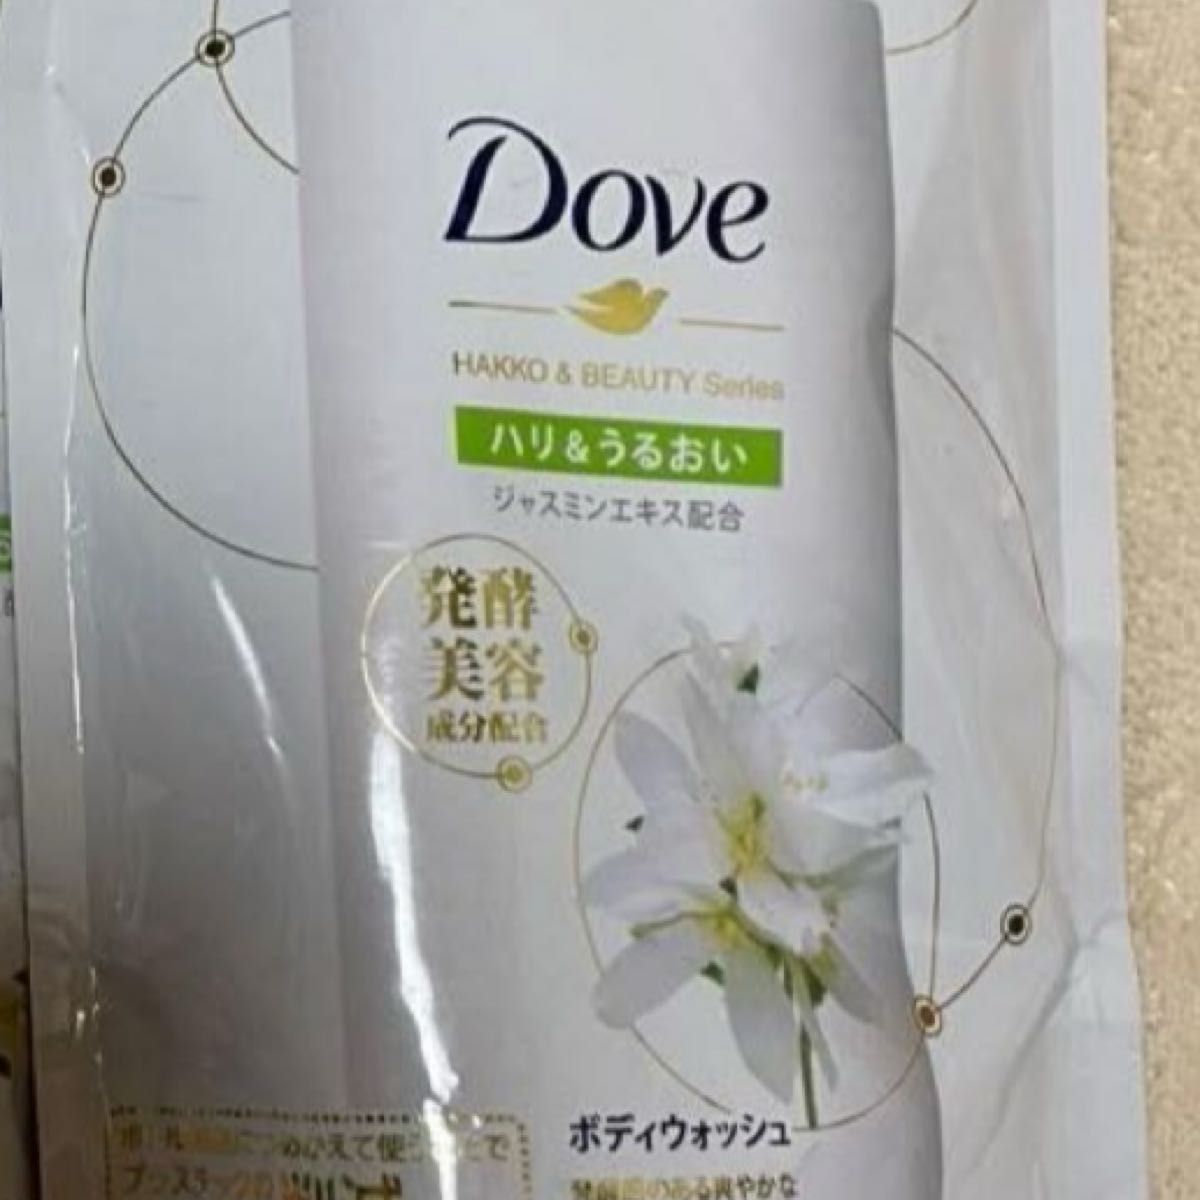 Dove (ダヴ) ボディソープ 発酵&ビューティーシリーズ ハリ&うるおい (ボディウォッシュ) 詰め替え用 340g1つ